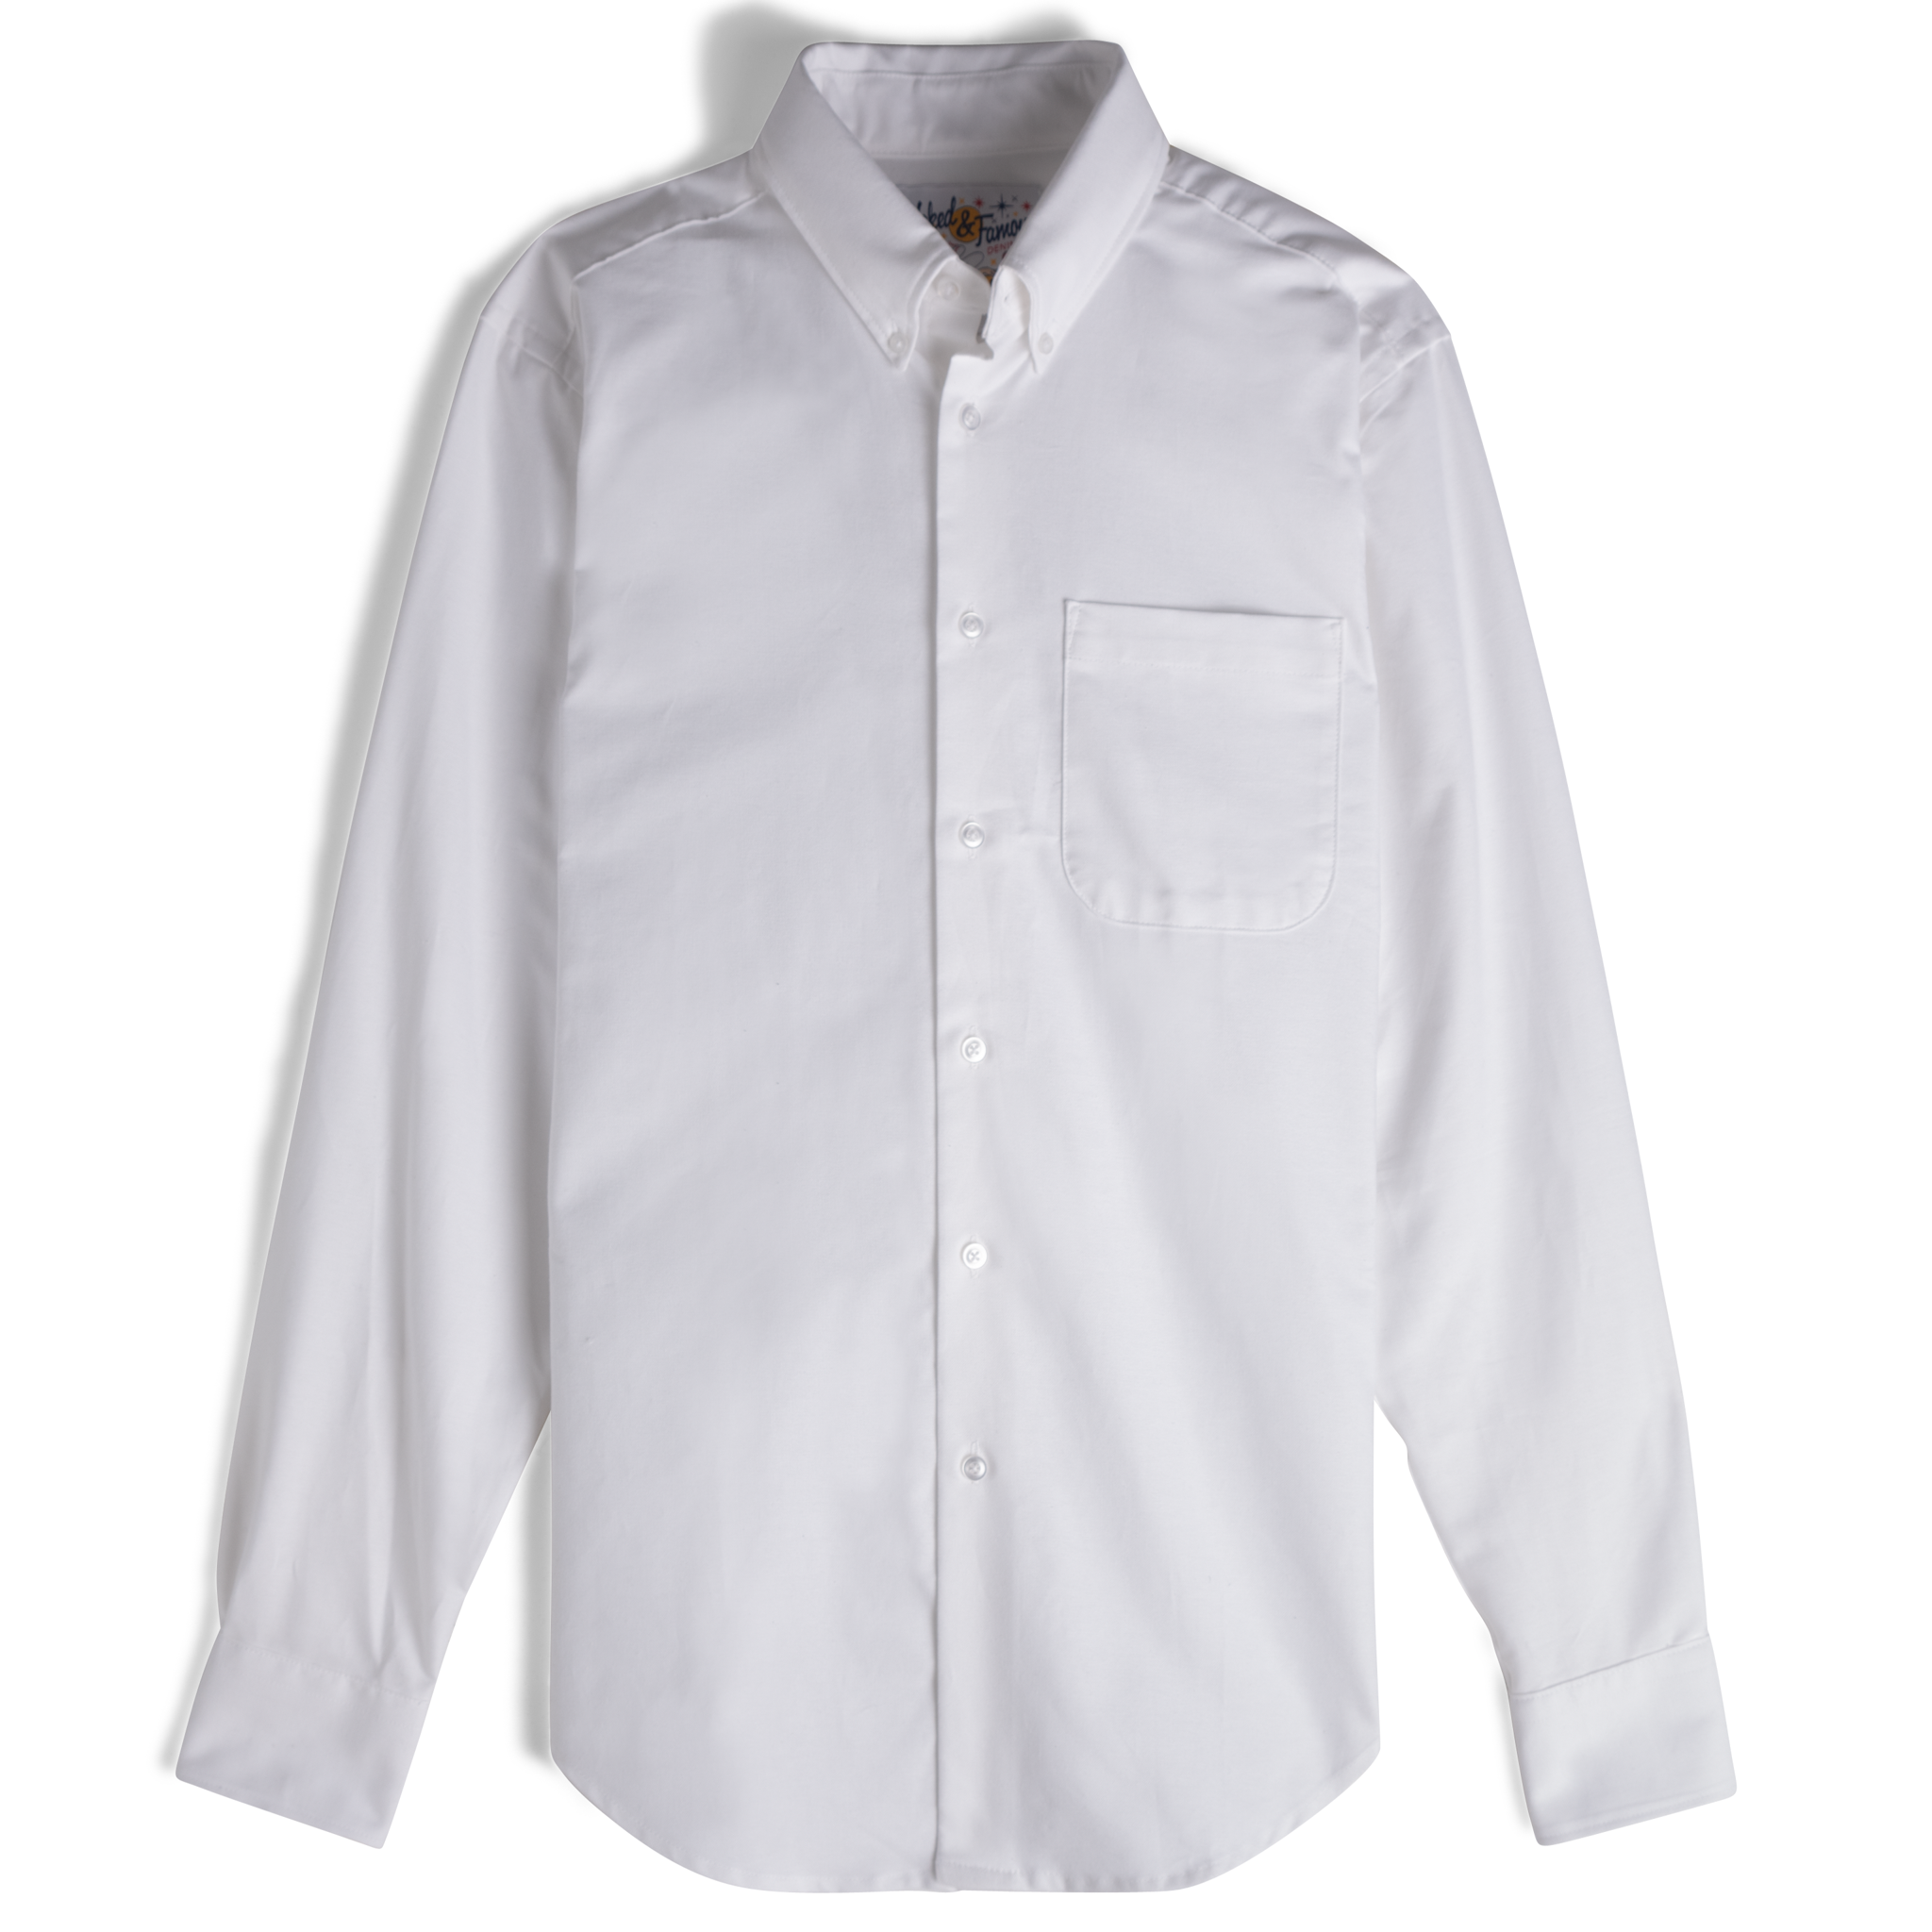  Easy Shirt - Cotton Oxford - white - flat front 